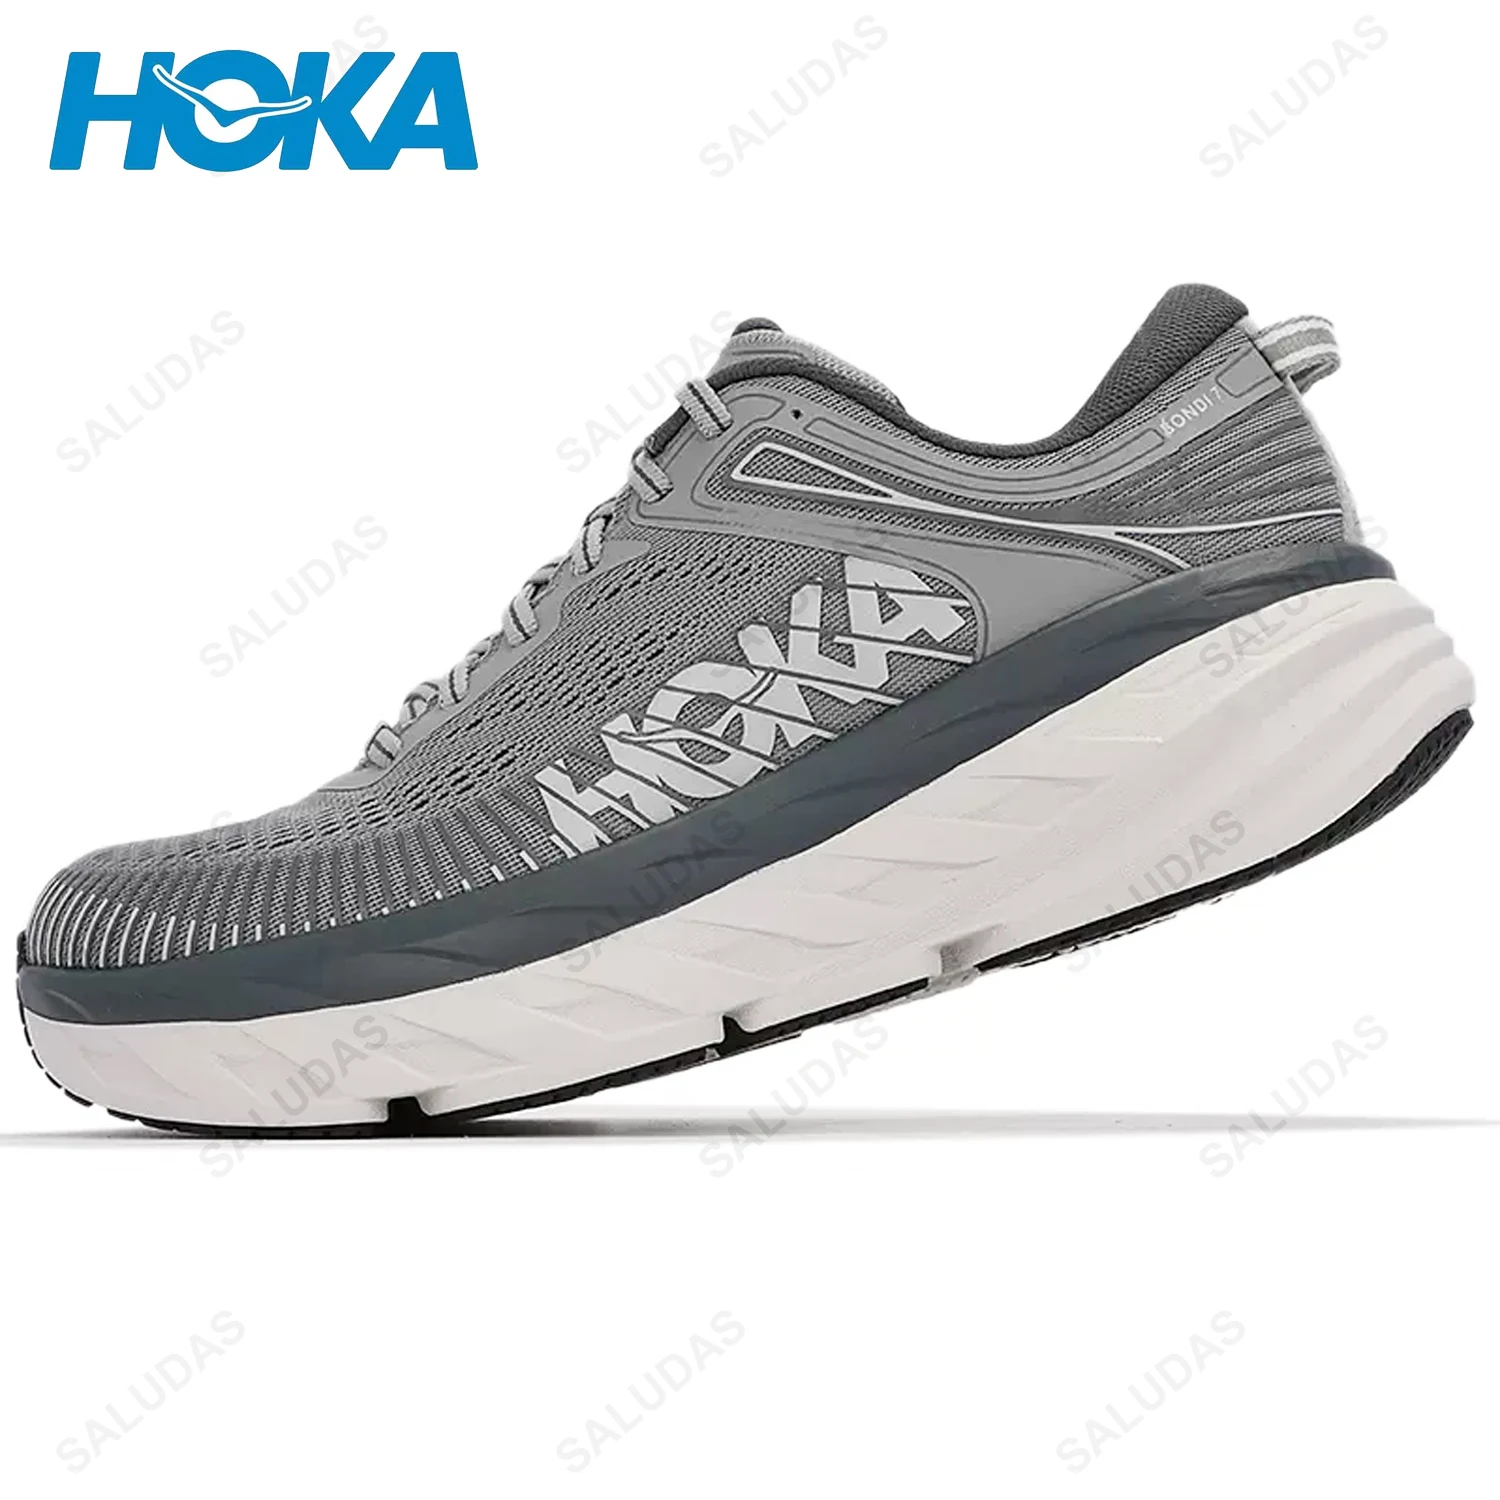 HOKA Original Men Shoes Bondi 7 Trail Running Shoes Lightweight Comfortable Casual Fitness Sneakers Road Jogging Sneakers Male